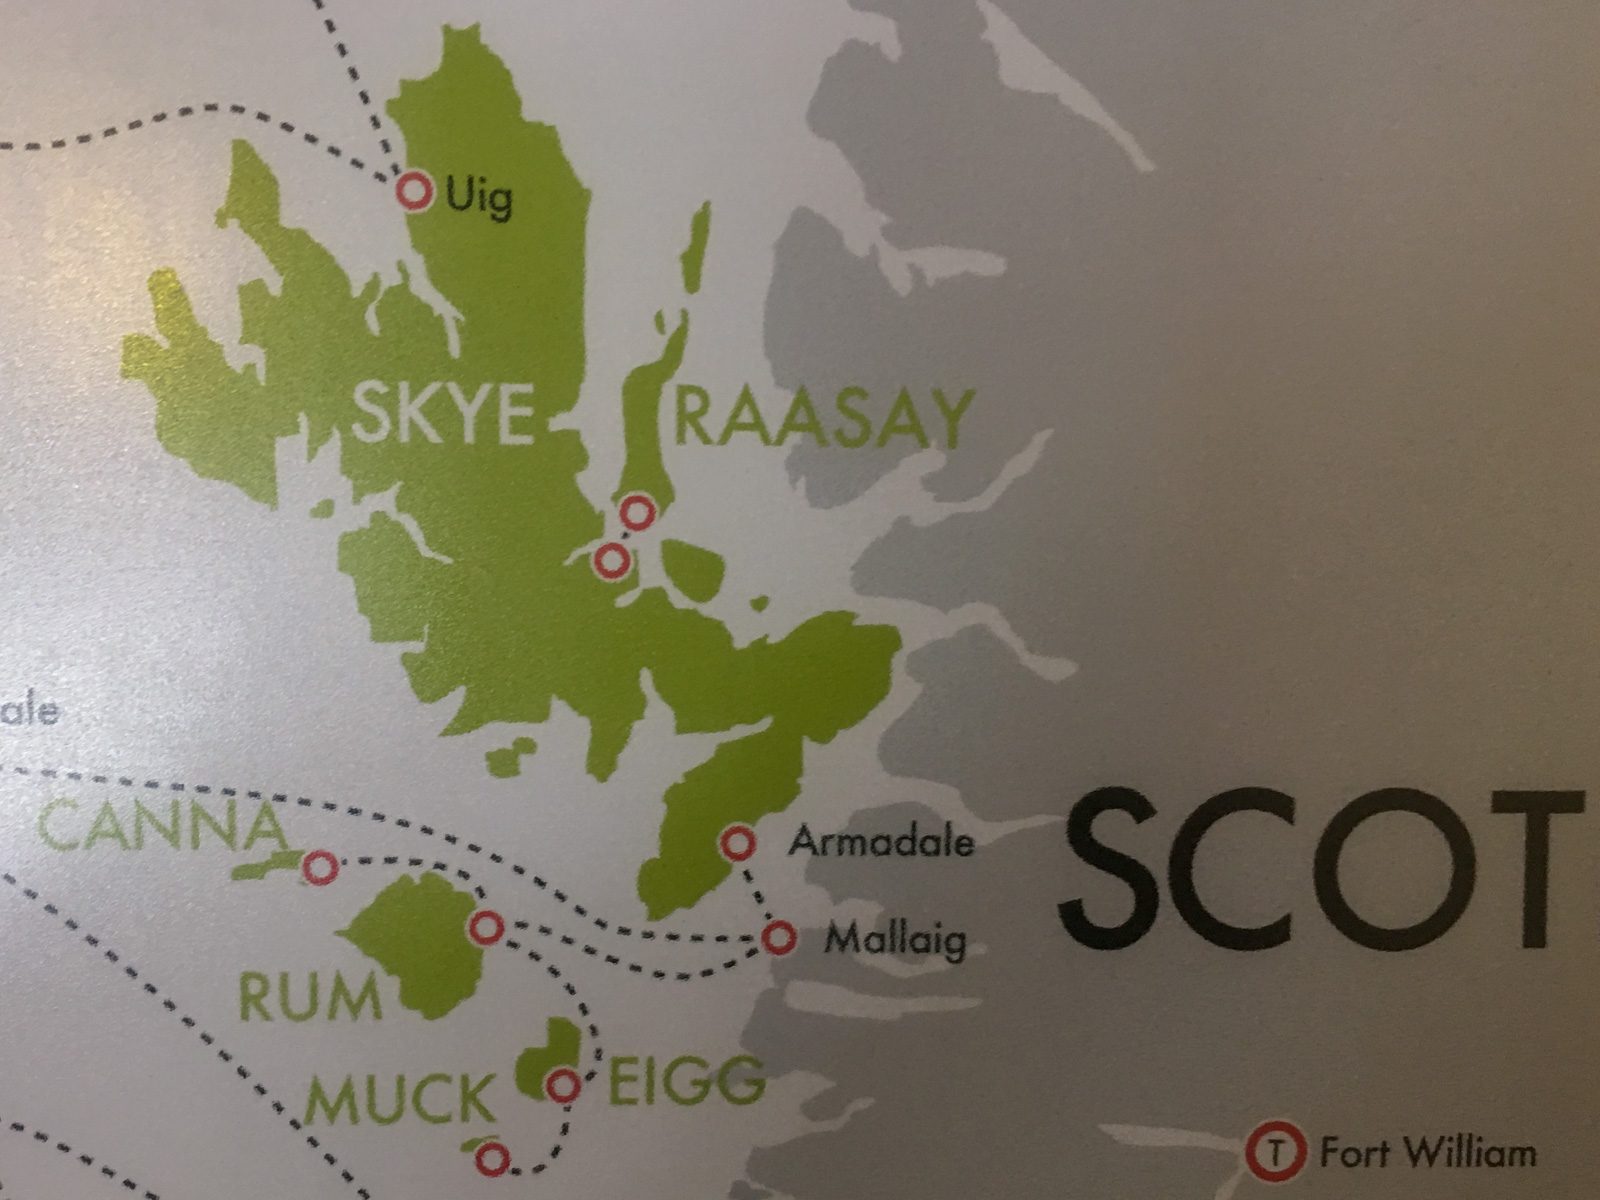 Sligachan Isle of Skye